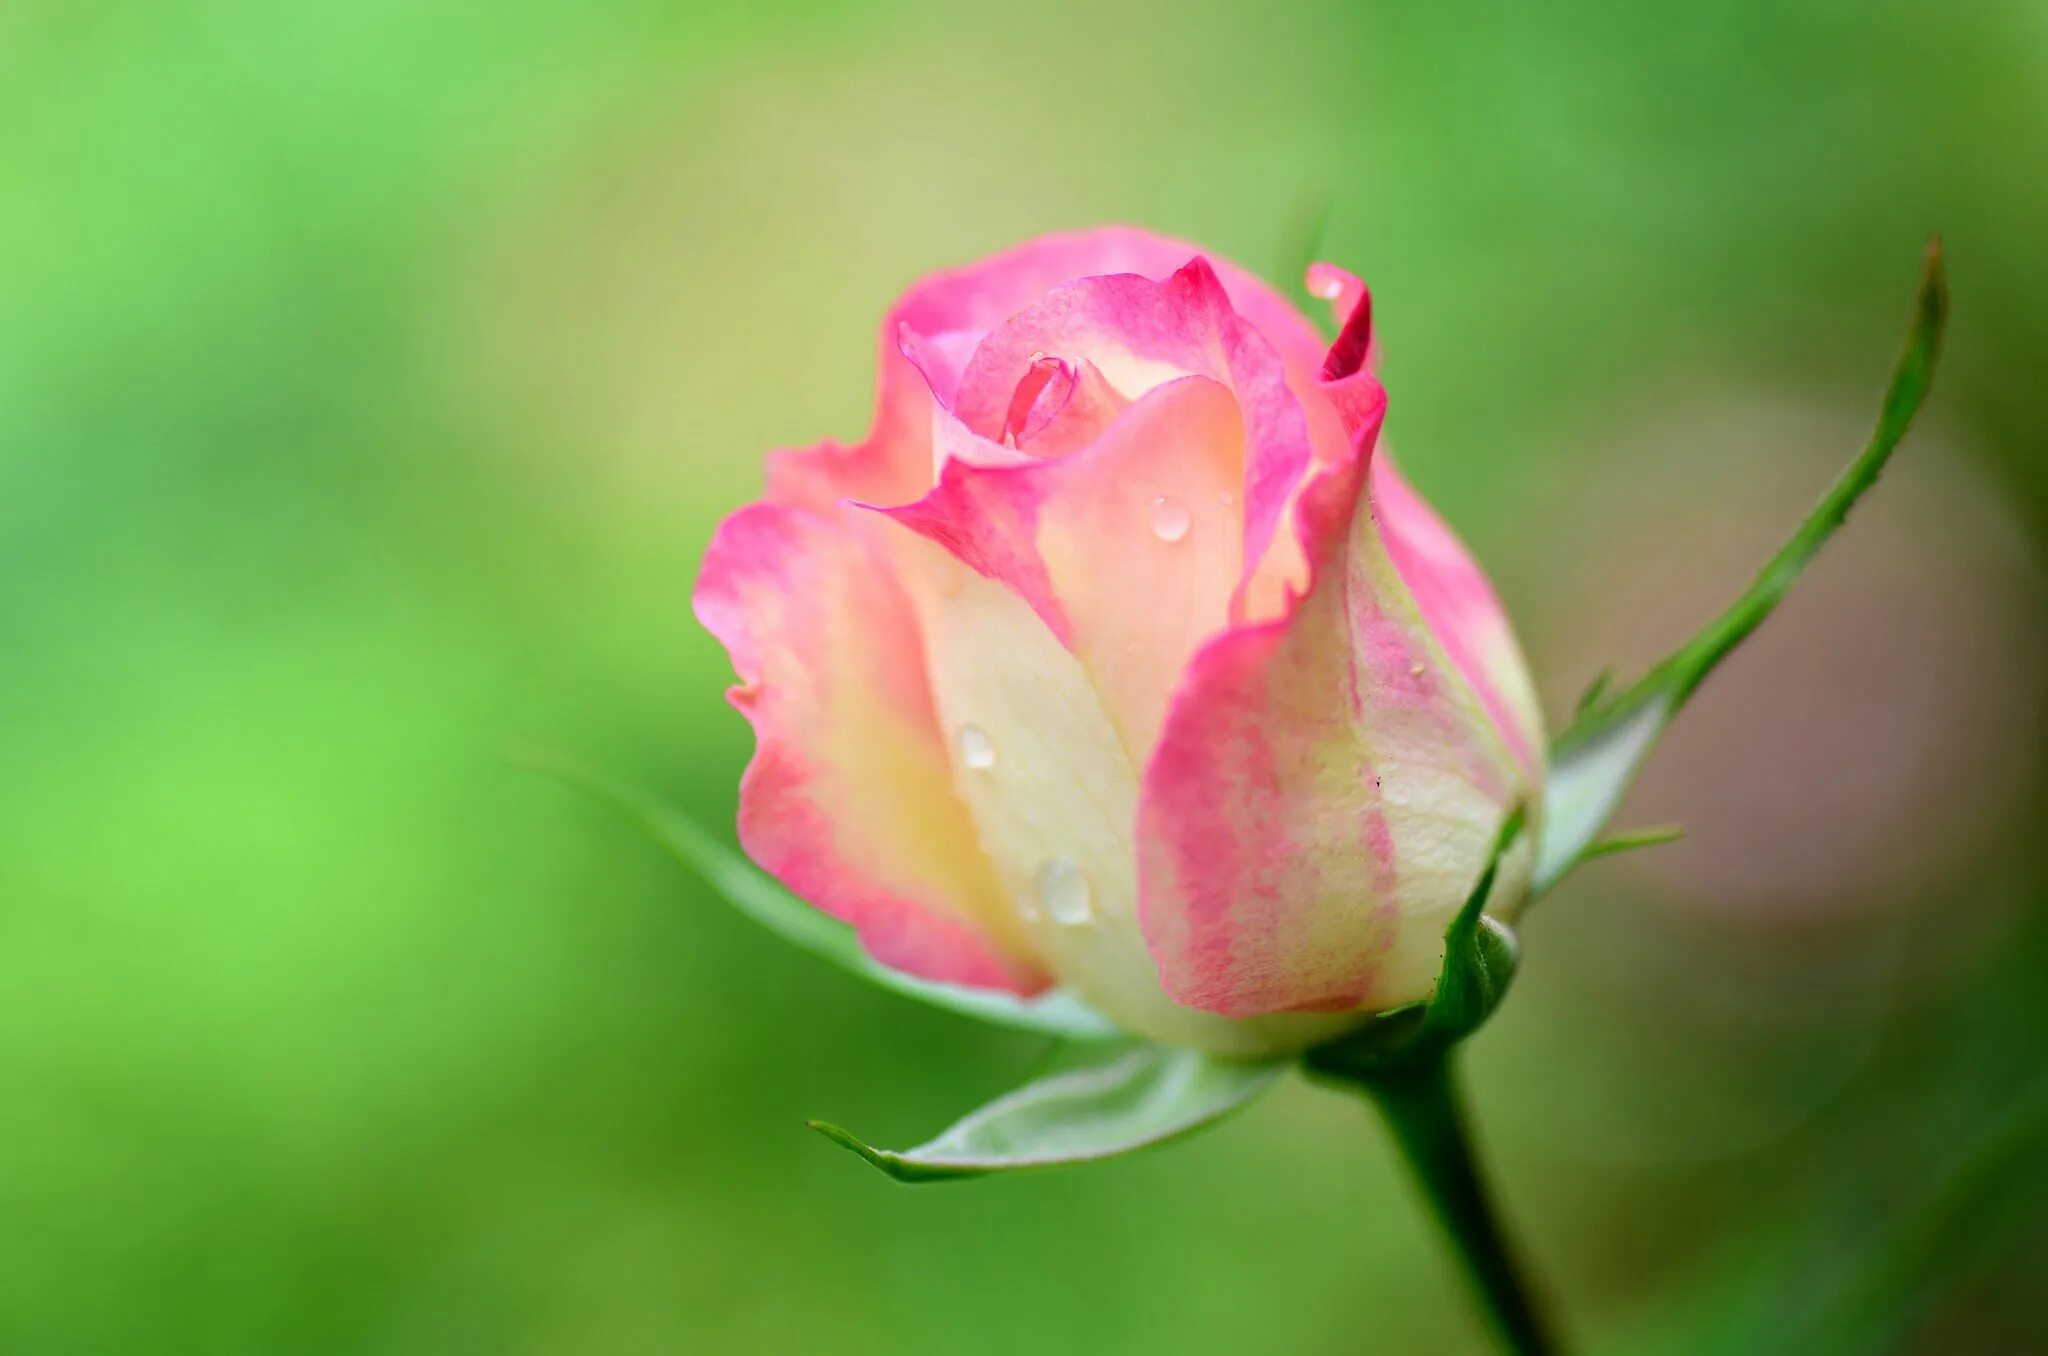 Красивые бутоны 1. Бутон розы. Бутон розовой розы. Розовые цветы бутоны. Нежные розовые бутоны.